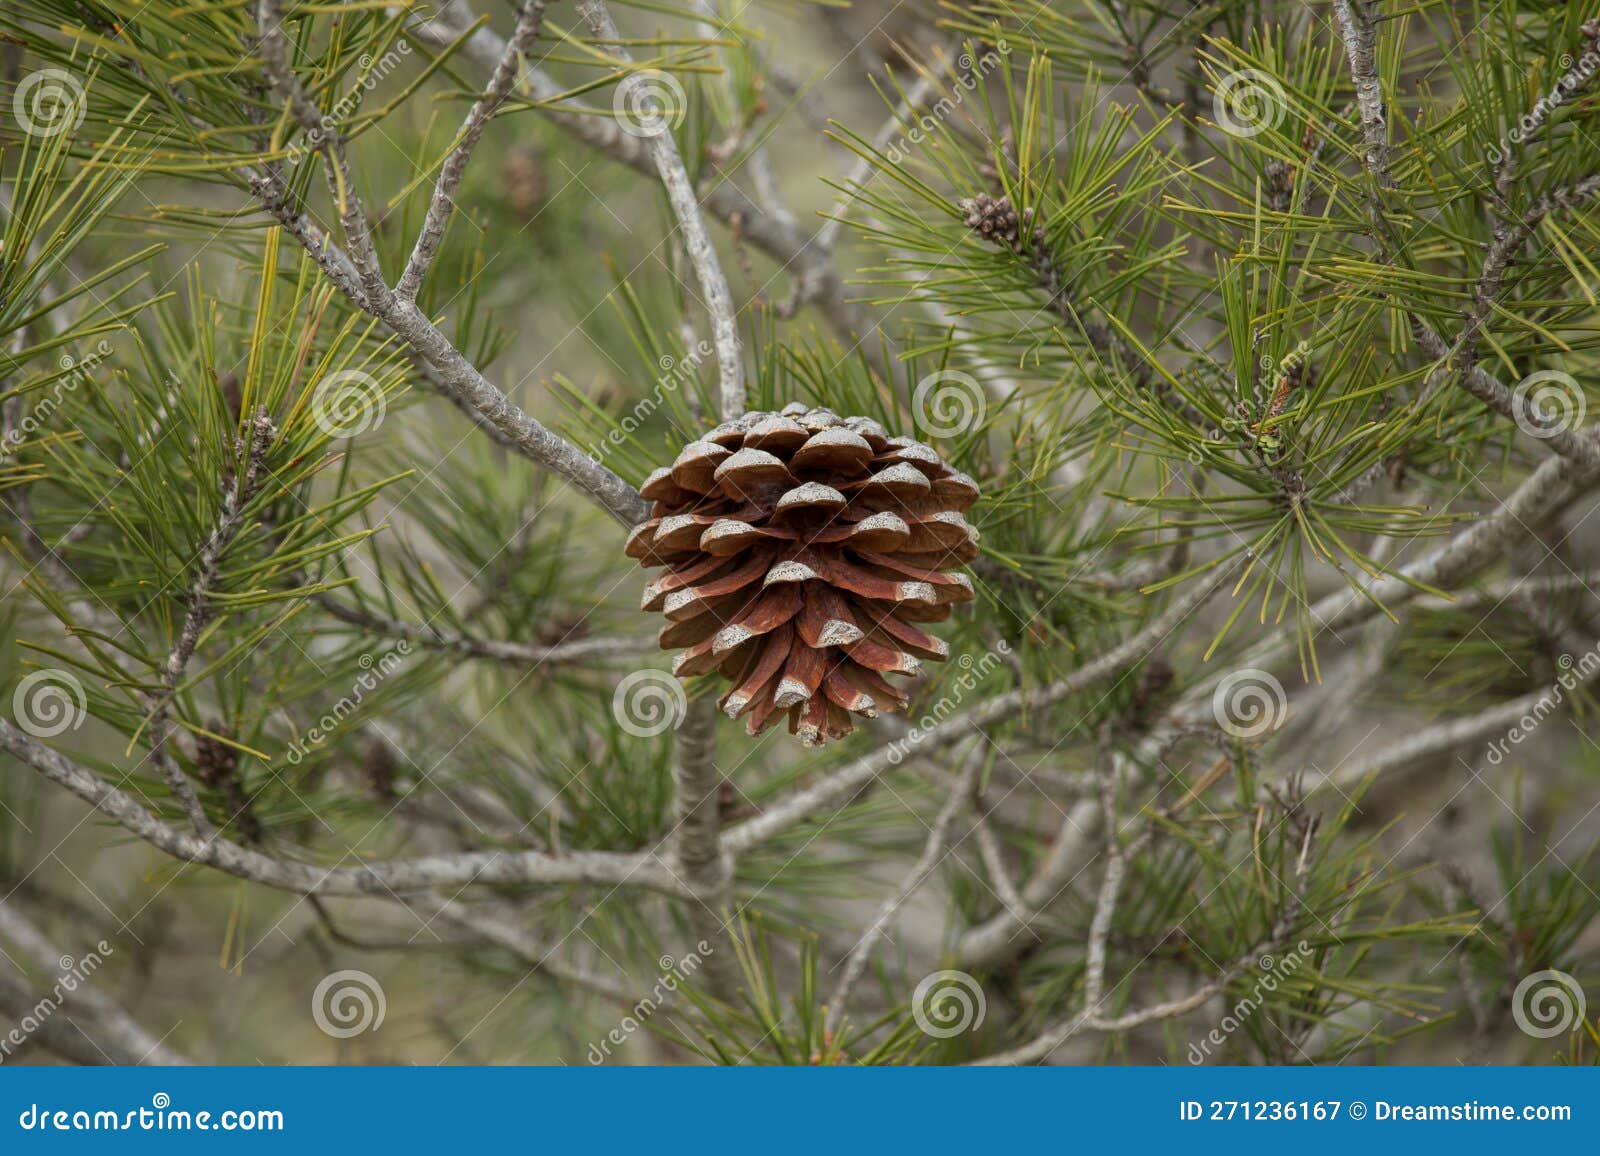 pine cone in the center